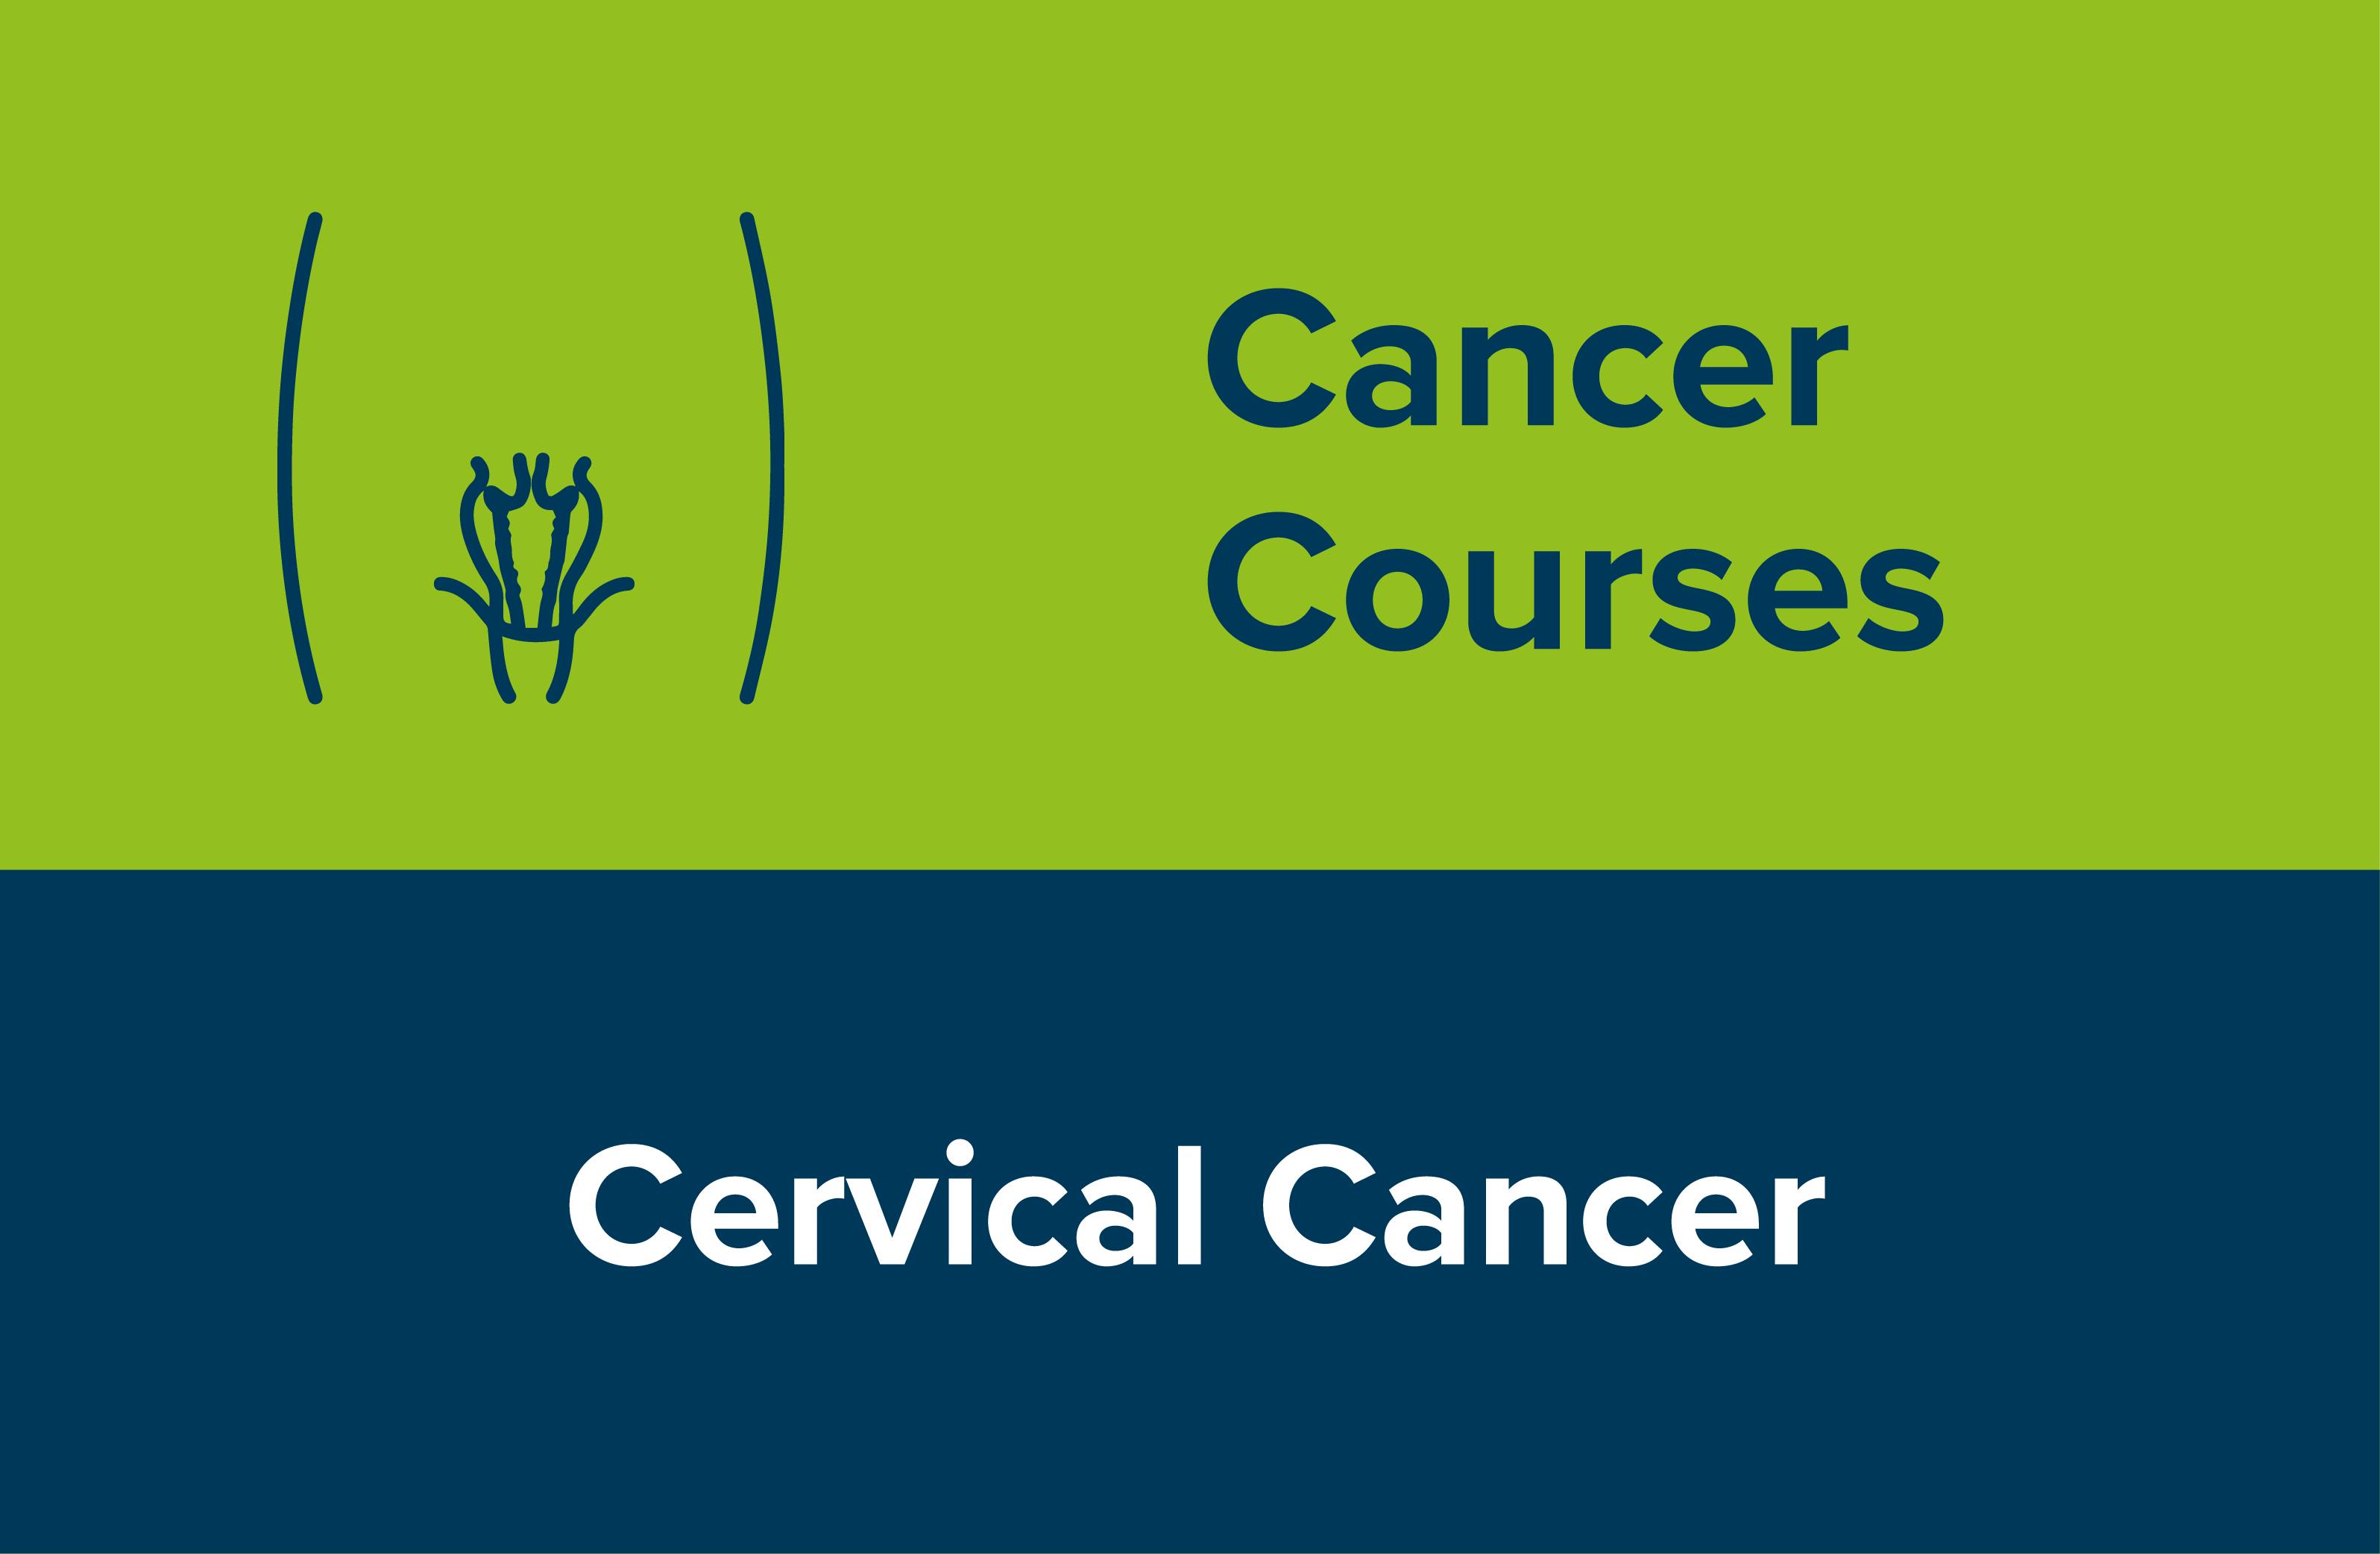 Cancer Courses, Cervical Cancer.